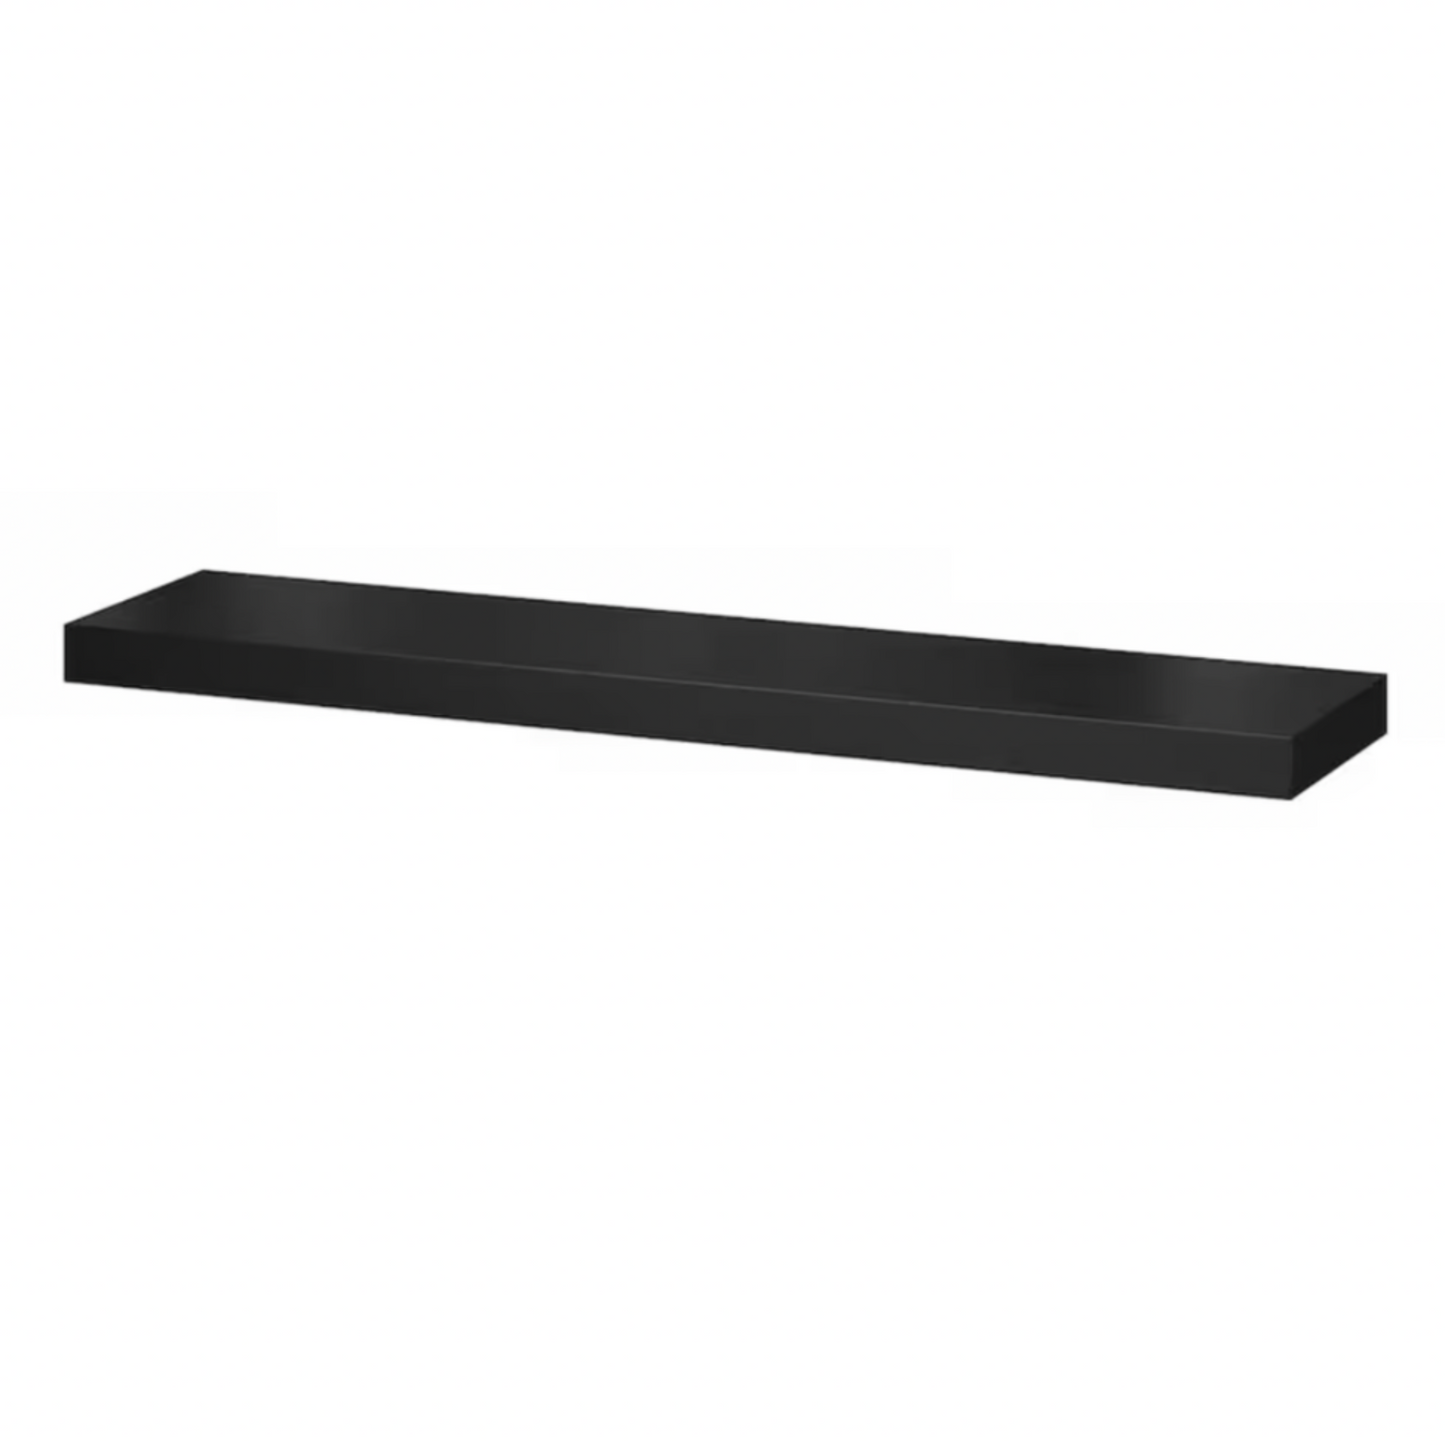 IKEA Lack Floating Shelf 110x26cm, Black/Brown (317018985)